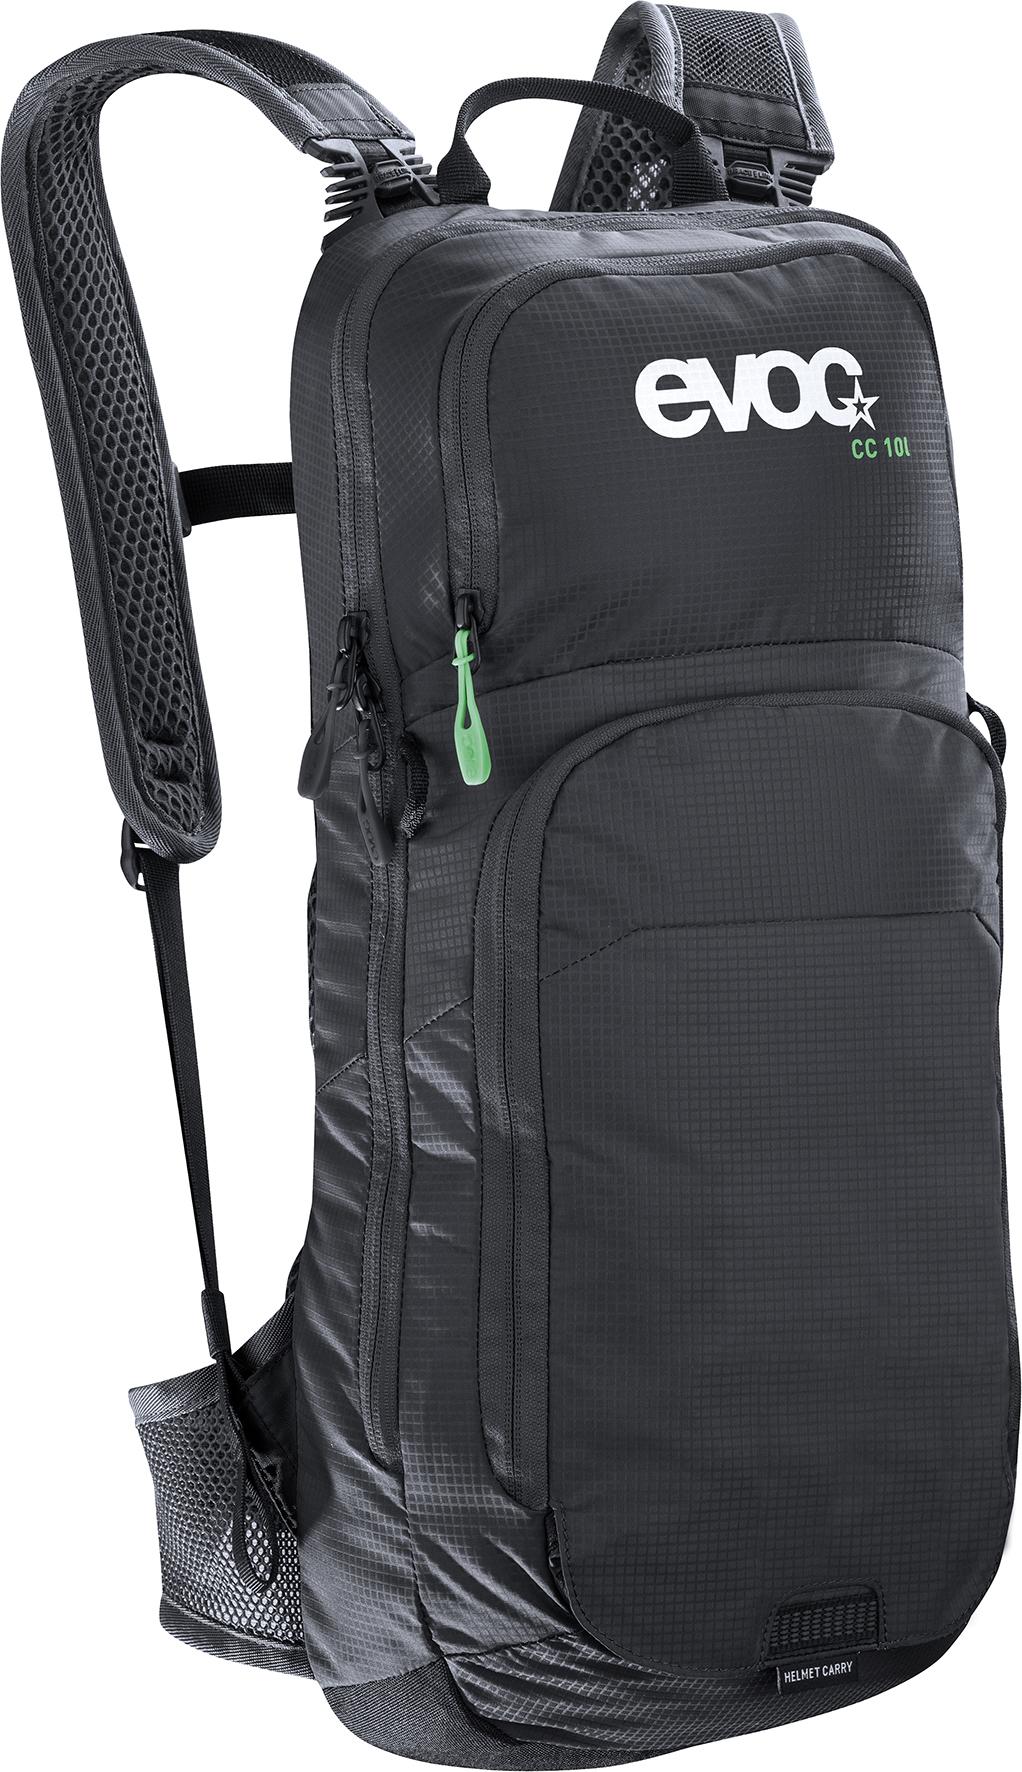 Evoc Cc 10L Performance Back Pack - Black